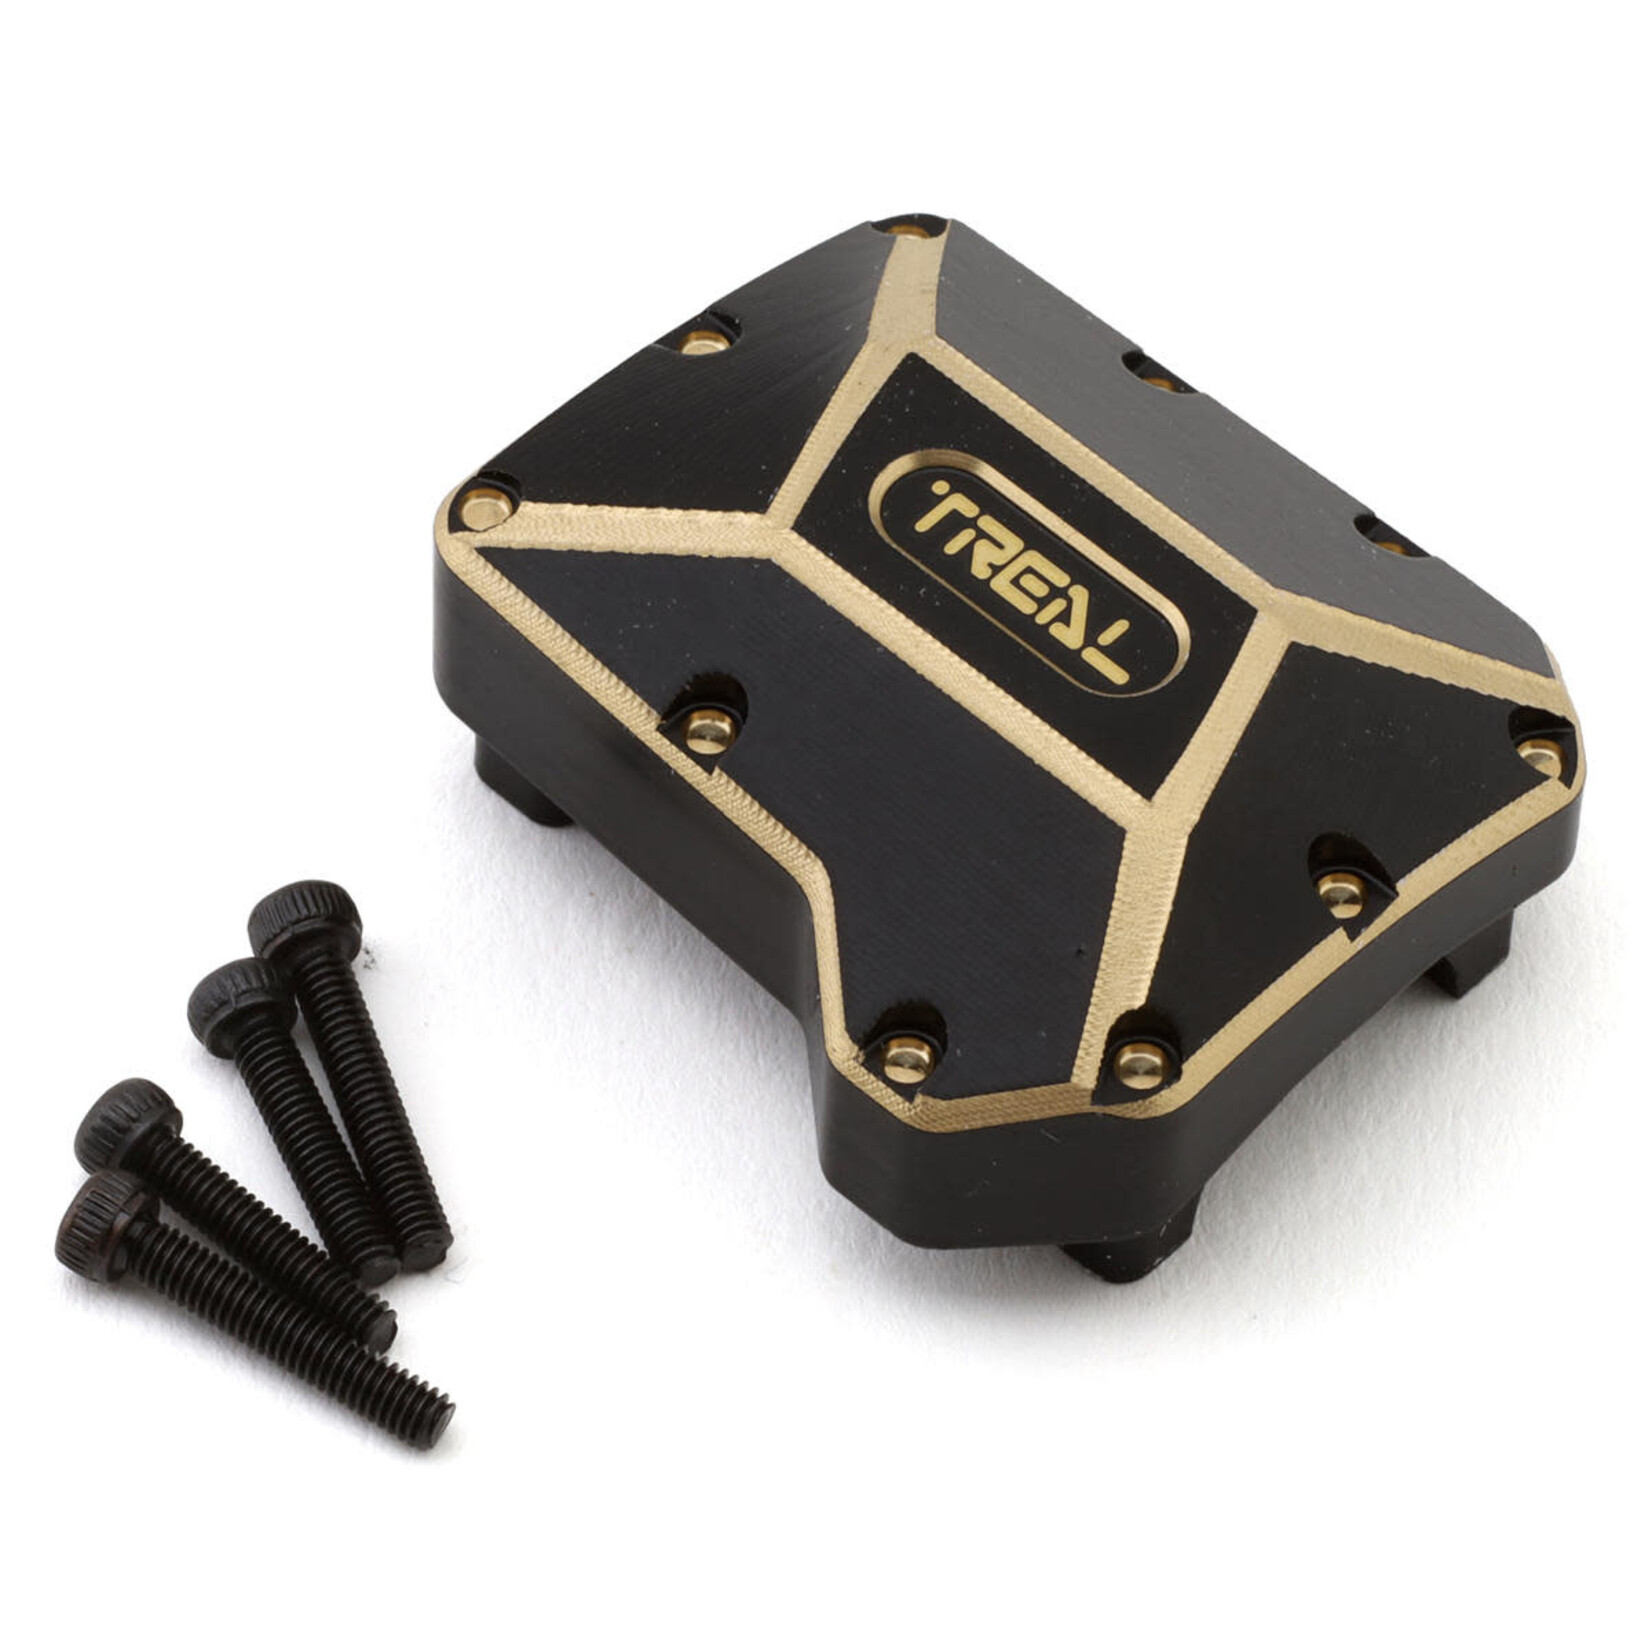 Treal Treal Hobby Traxxas TRX-4 Brass Differential Cover (Black) (70g) #X002C2IAXT